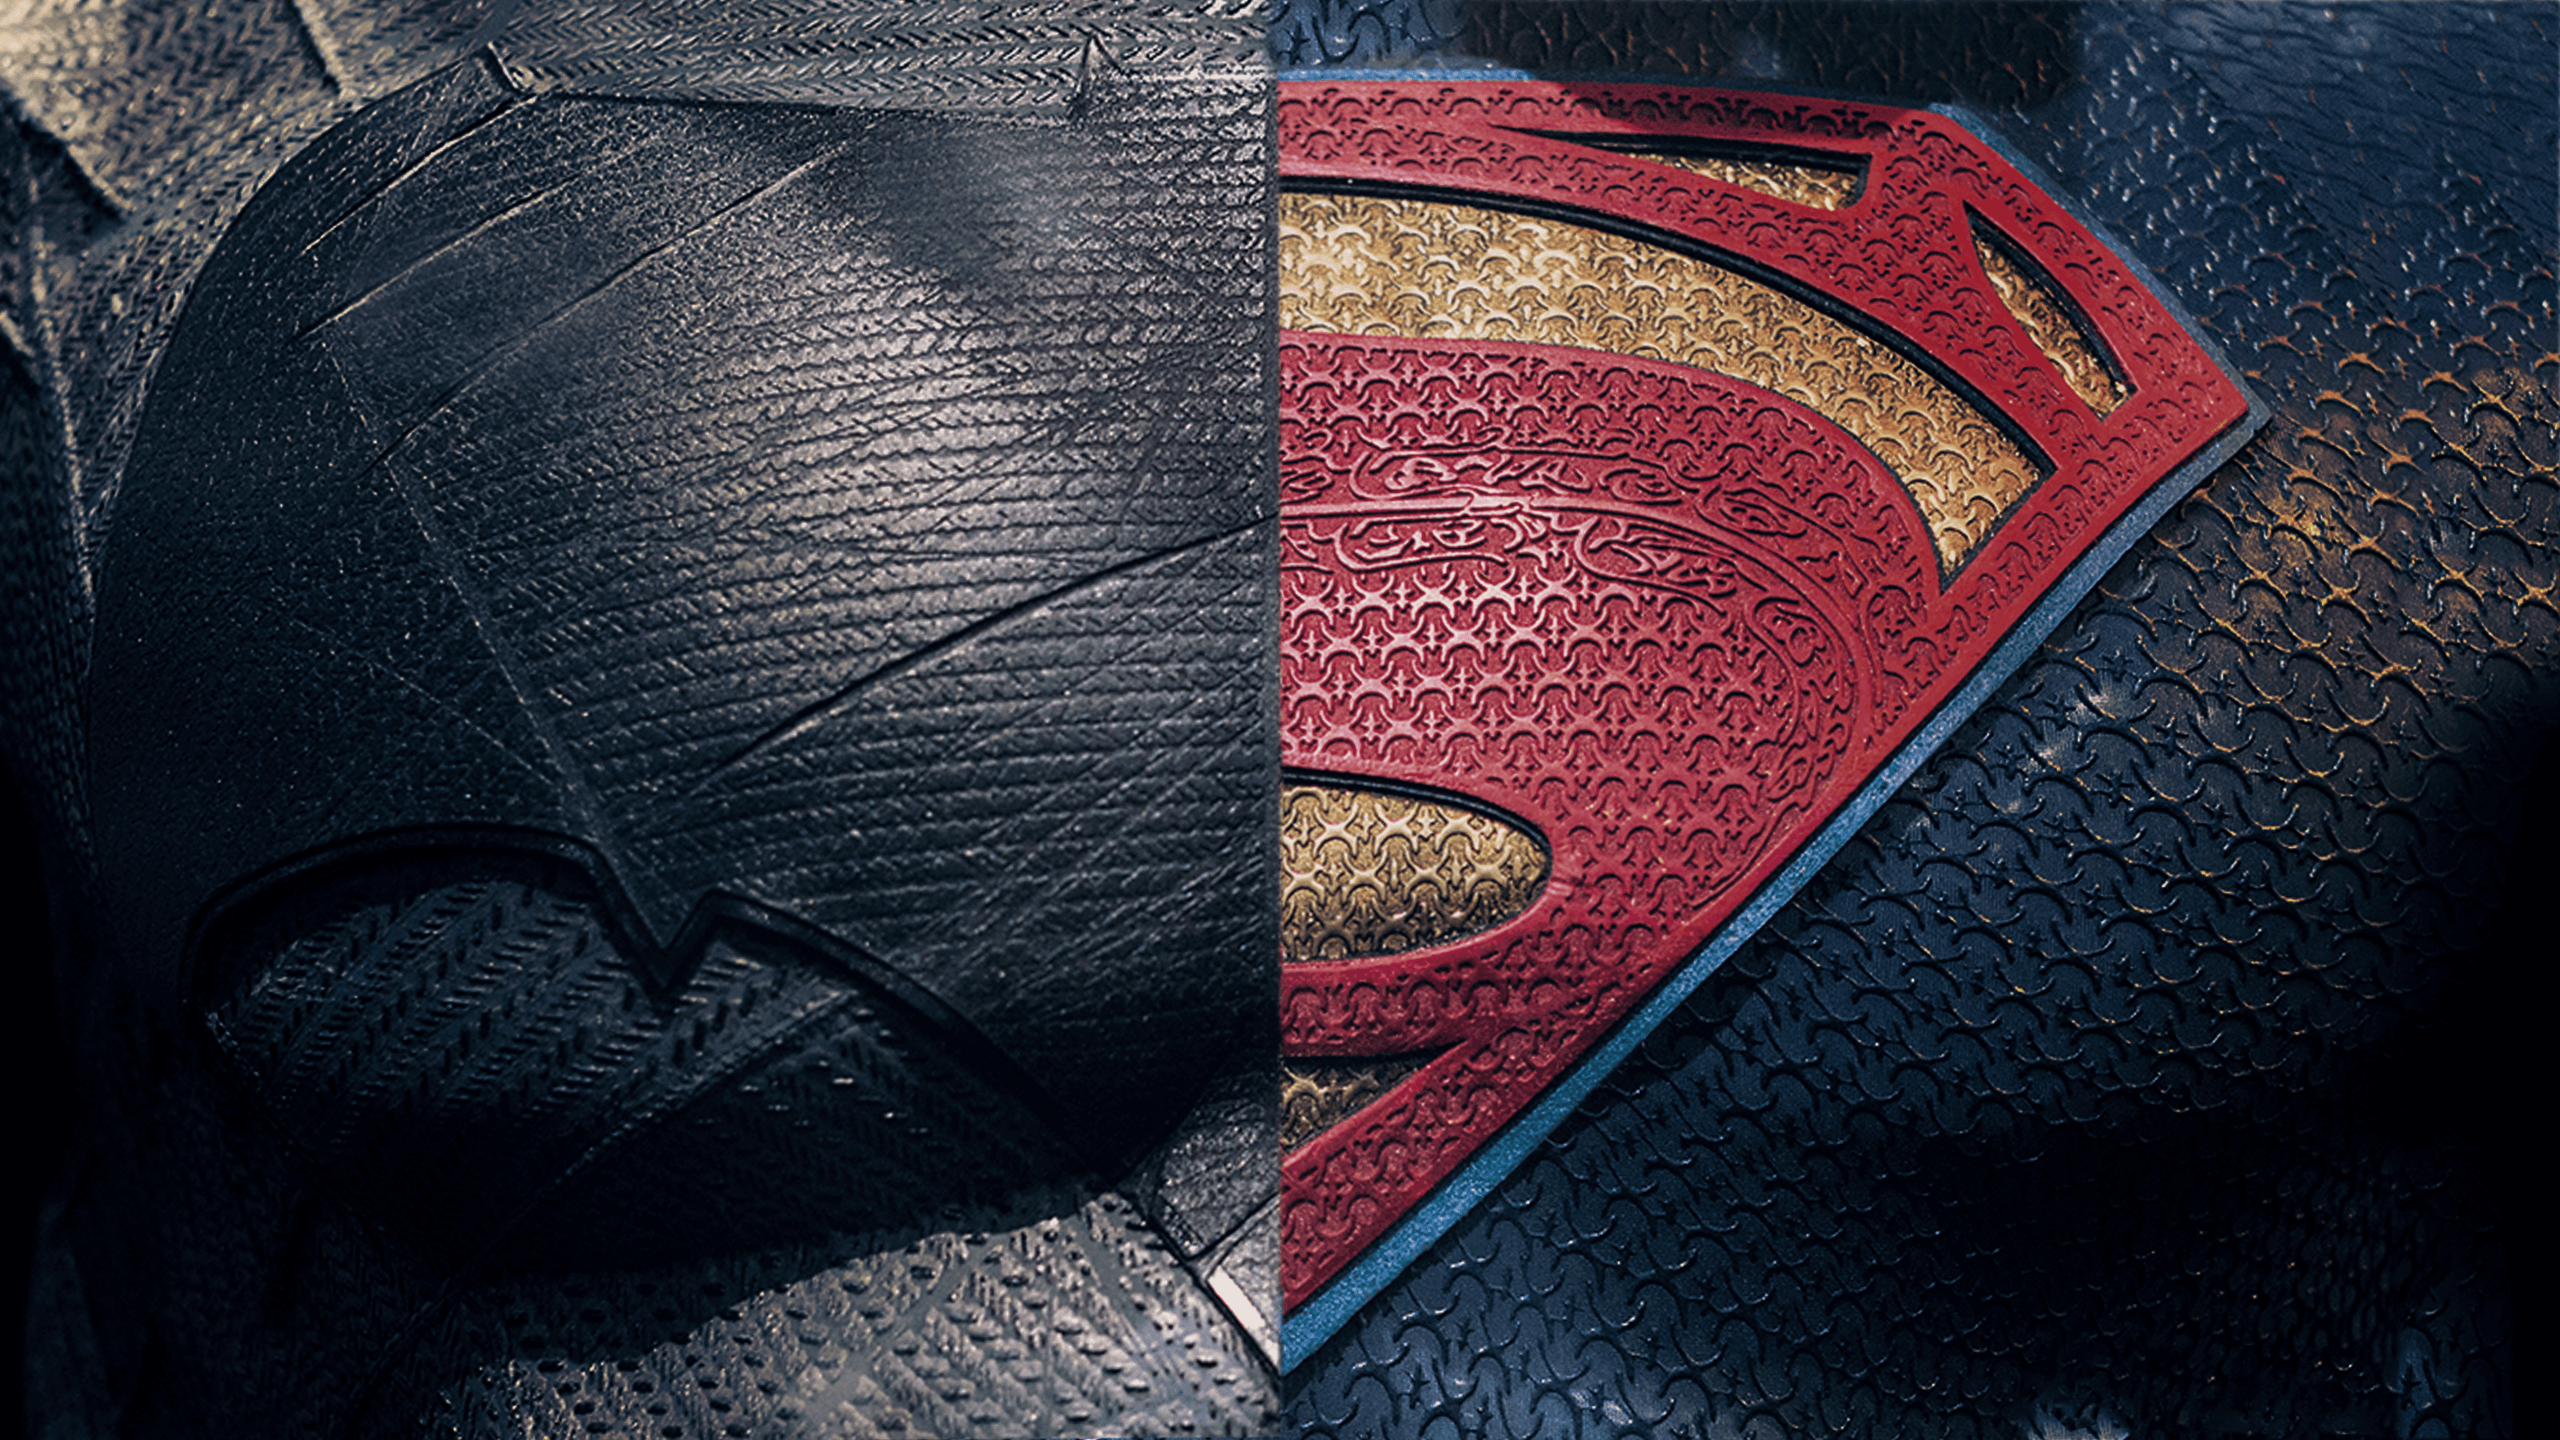 Batman And Superman HD Wallpaper. Wallpaper, Background